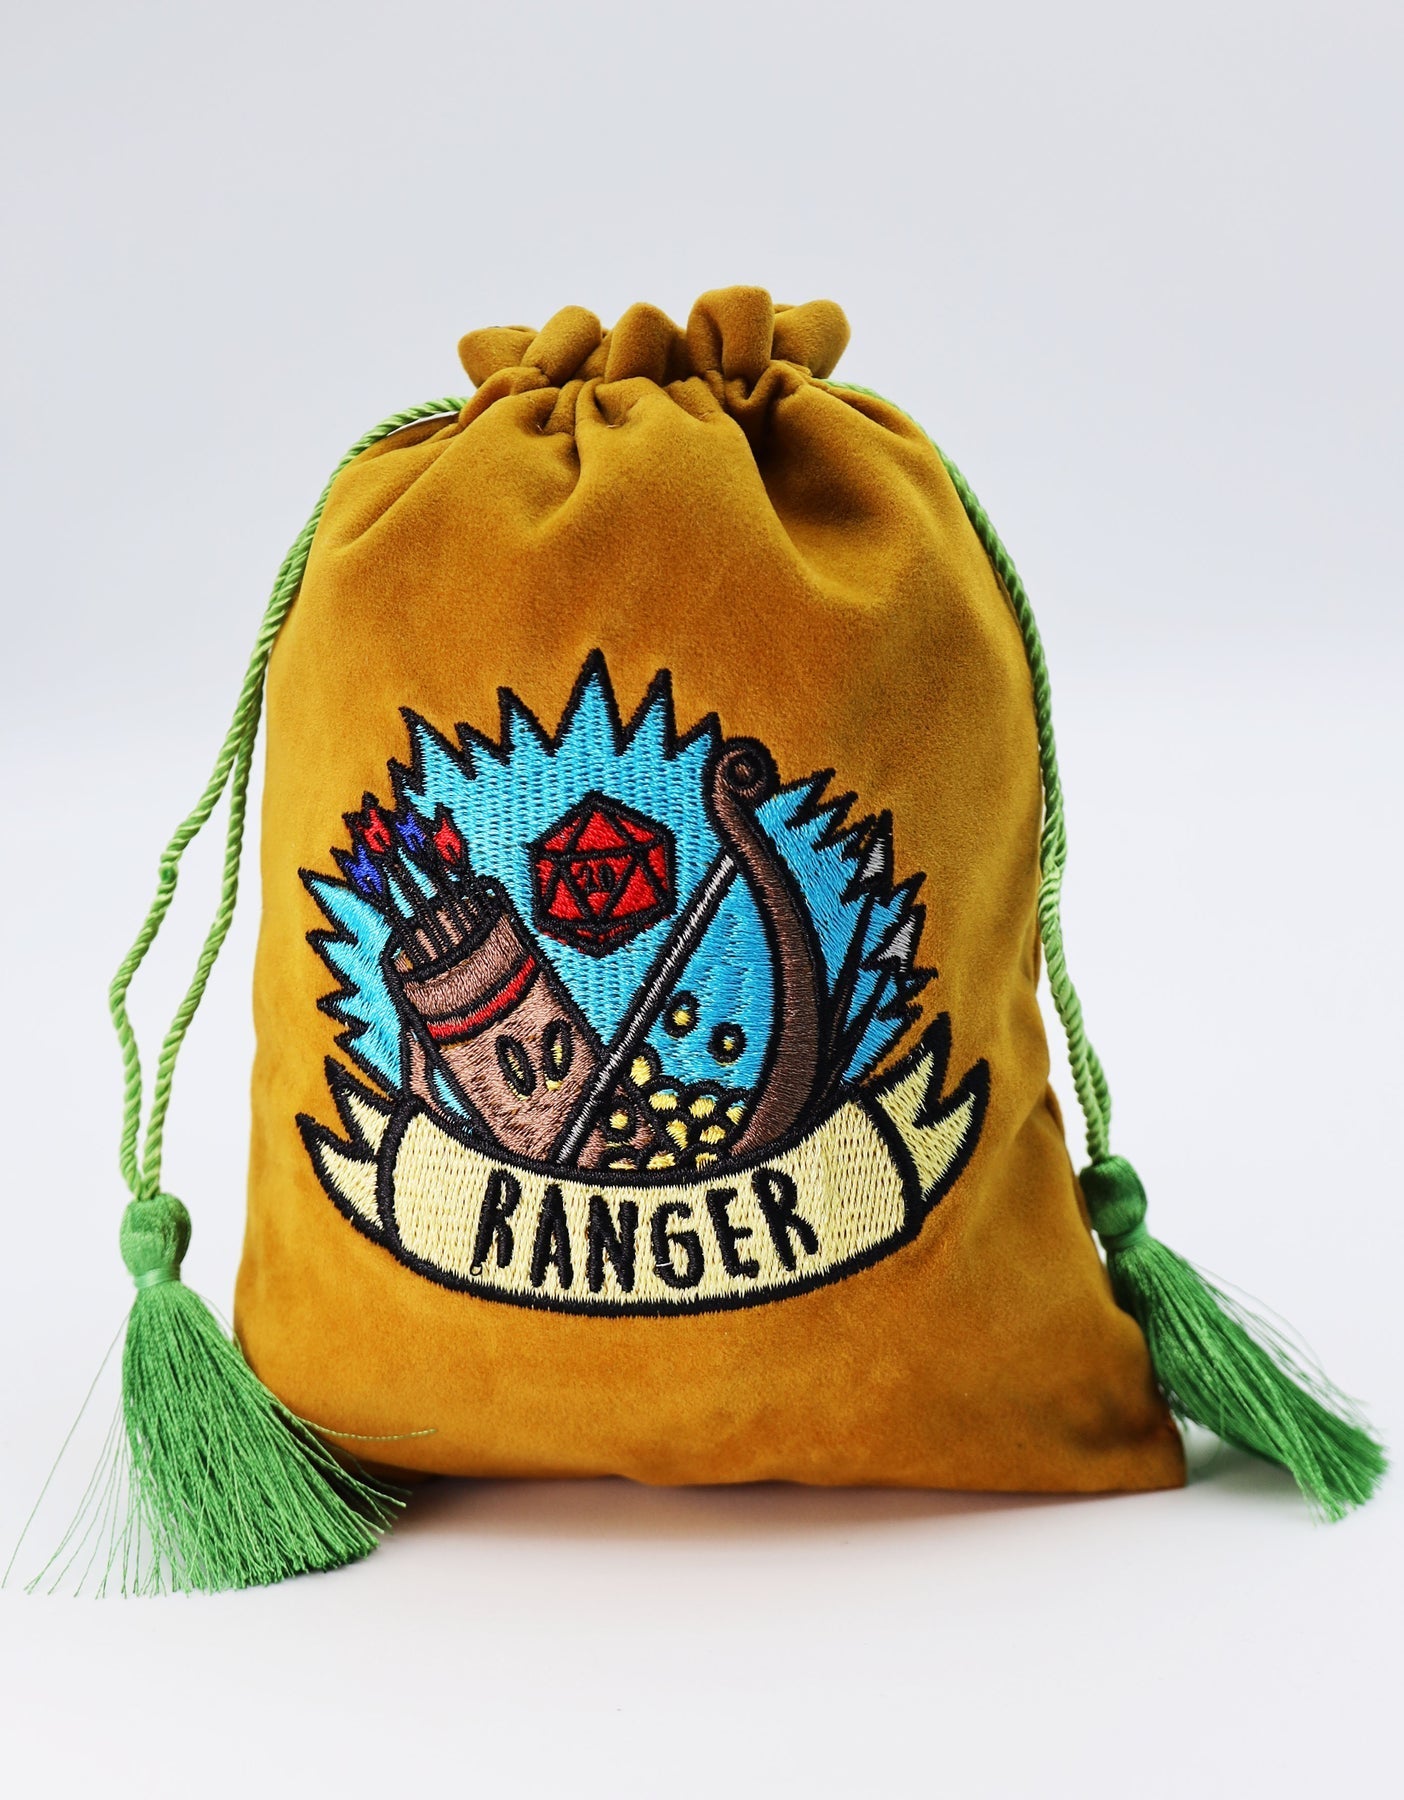 Dice Bag - Ranger | Grognard Games